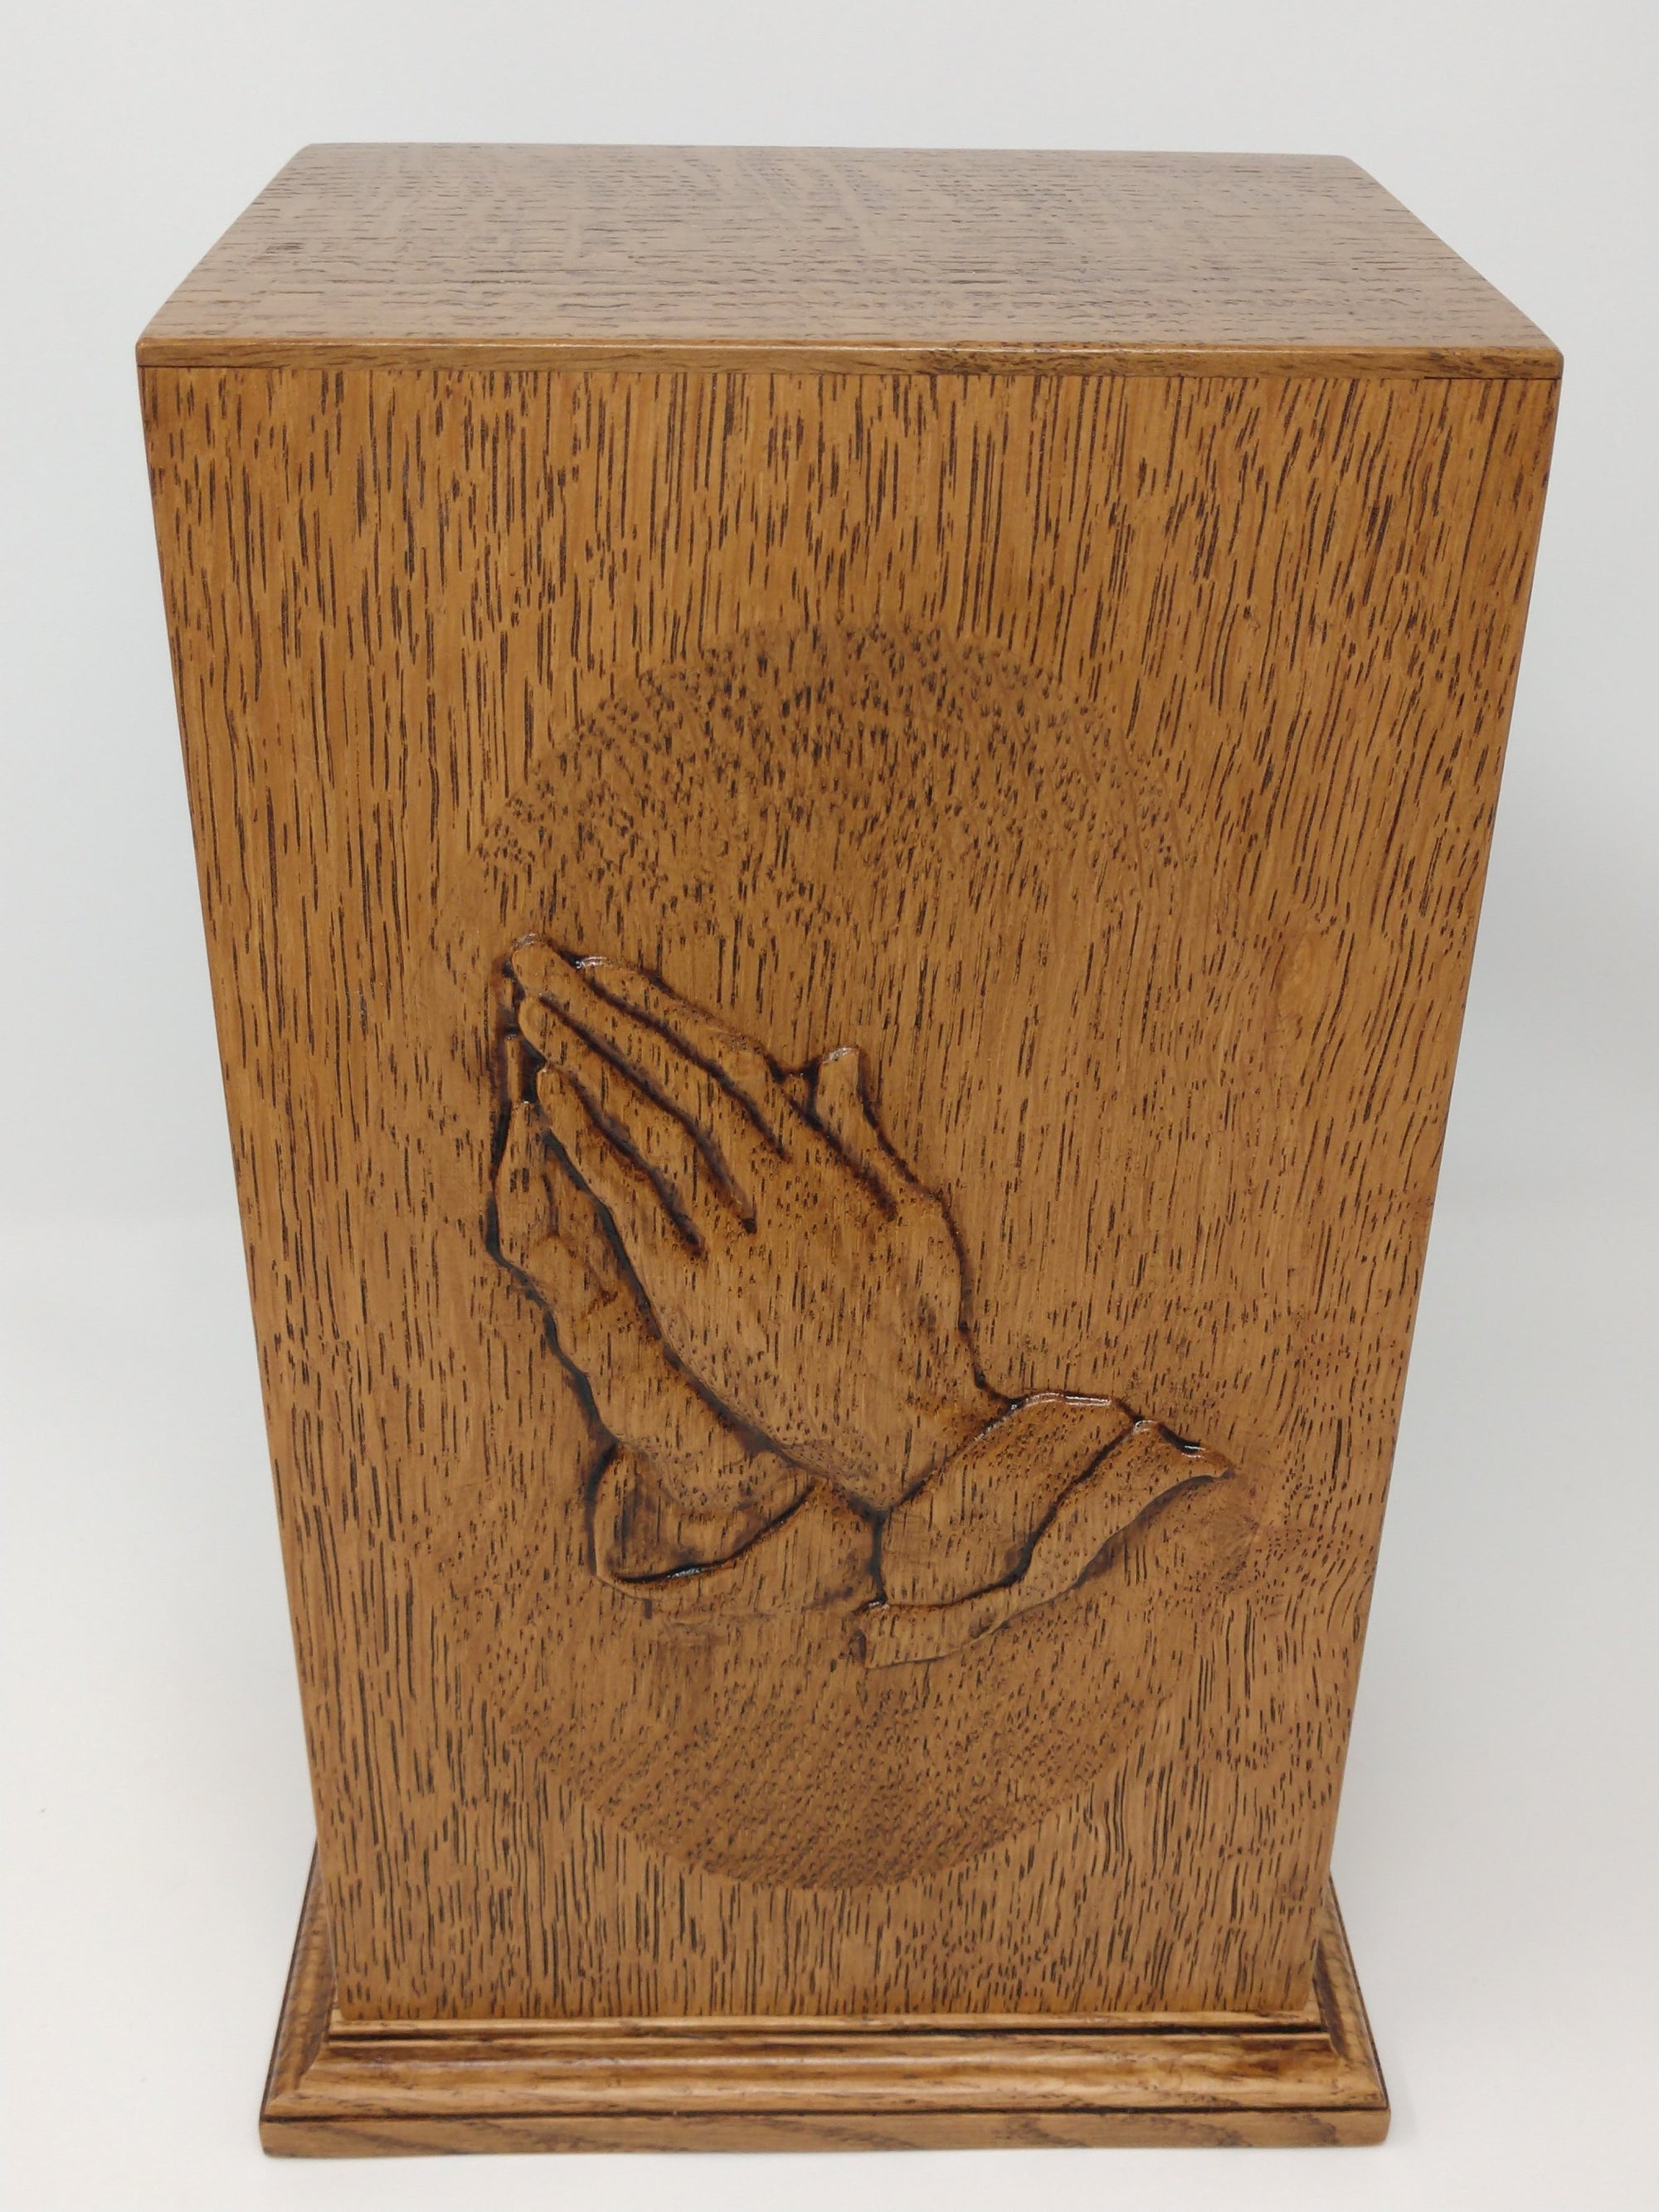 Praying Hands {Christian}